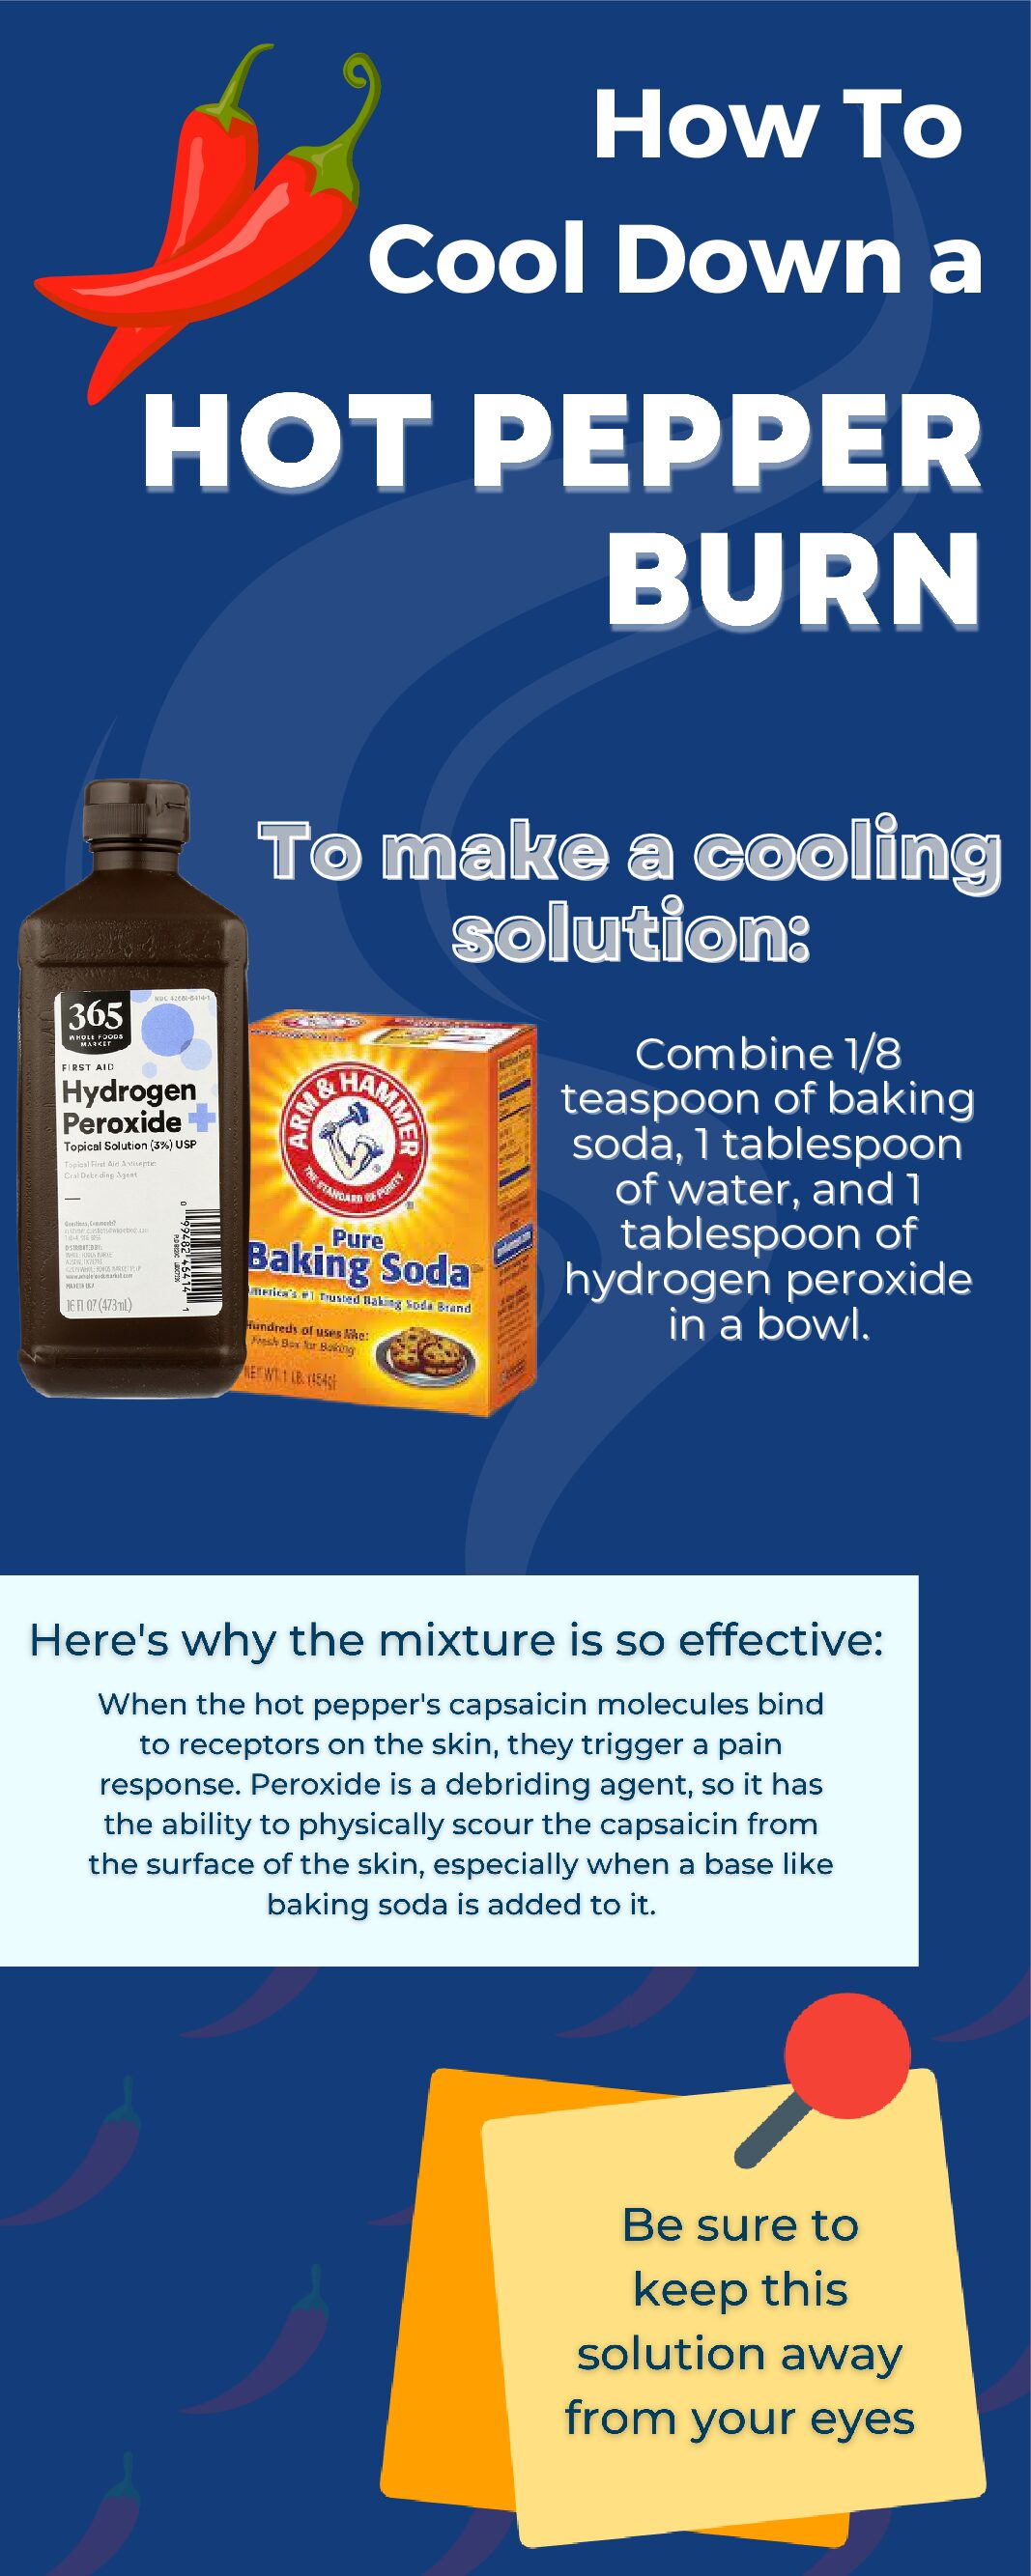 How to Cure a Hot Pepper Burn